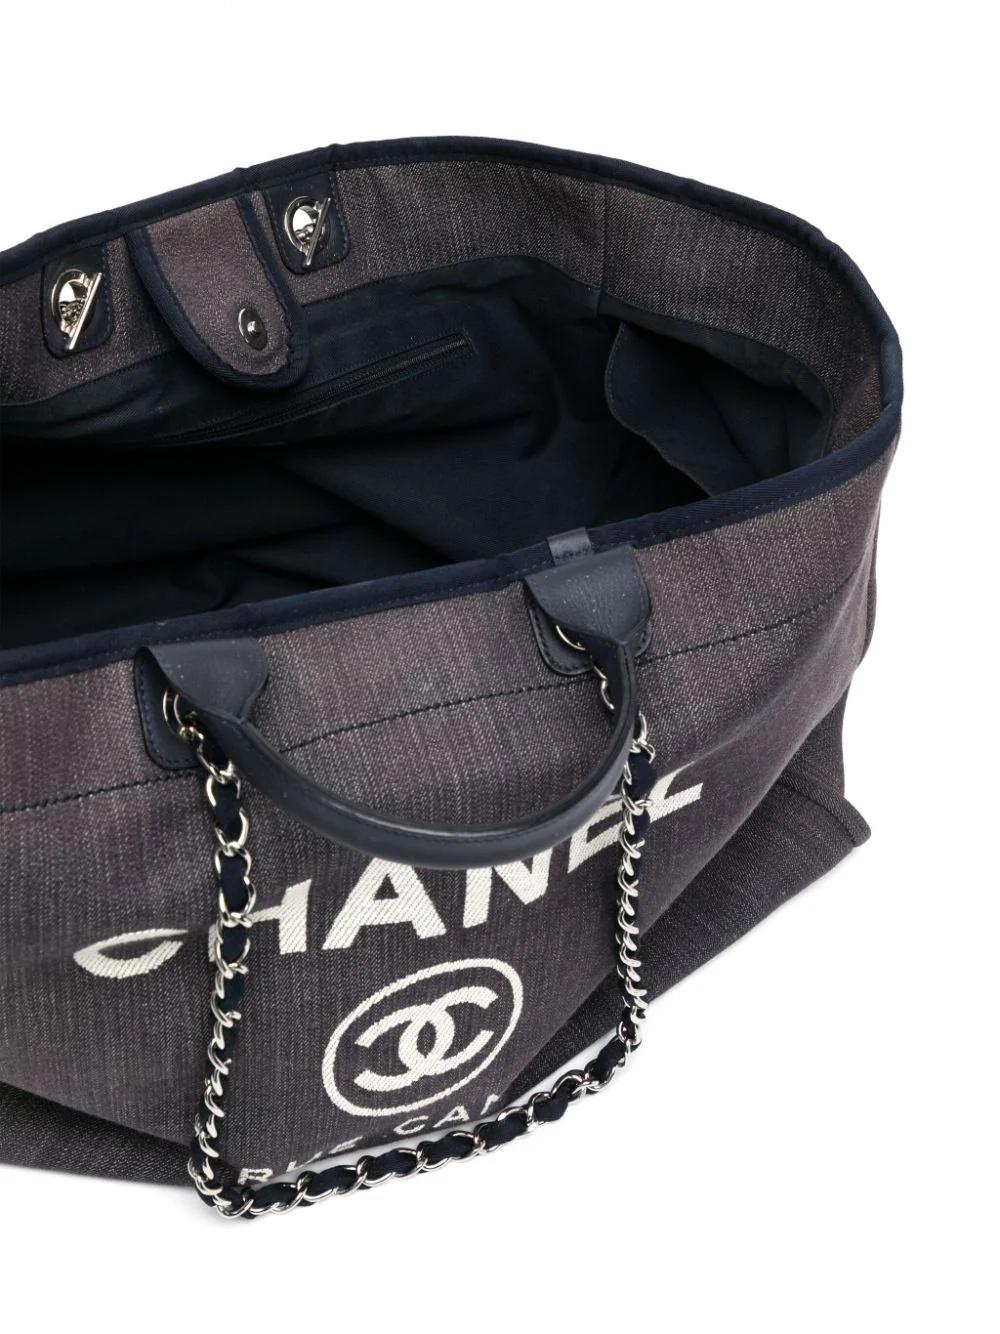 Black Chanel Deauville XL Tote Bag